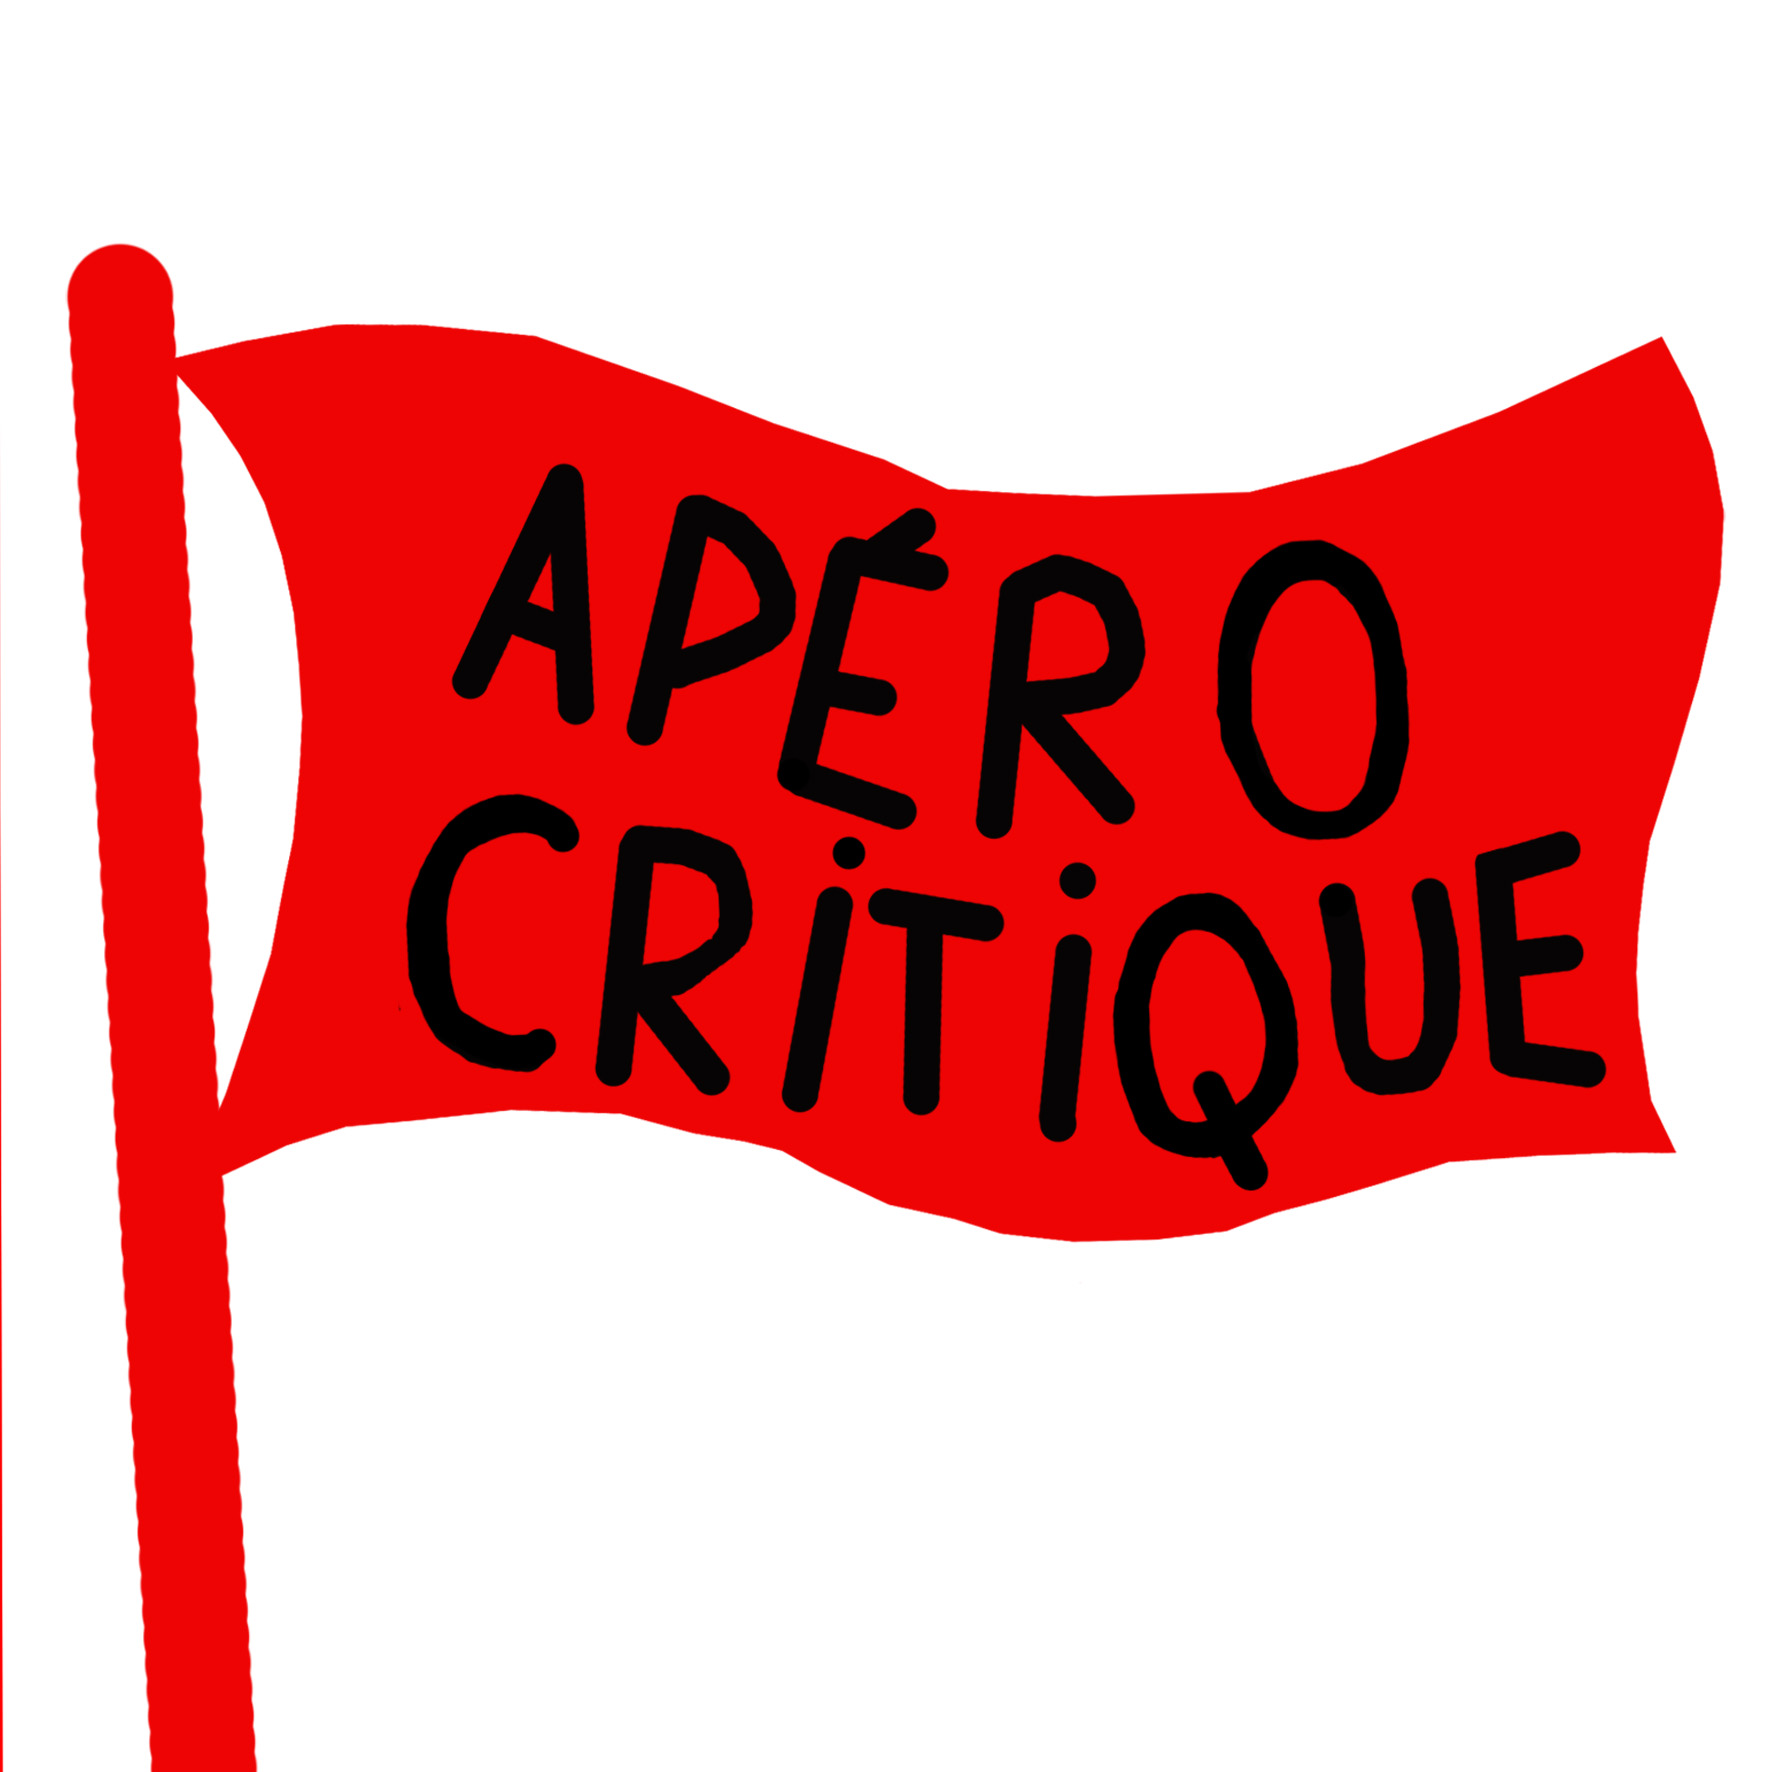 apero_critique_carre_newsletter